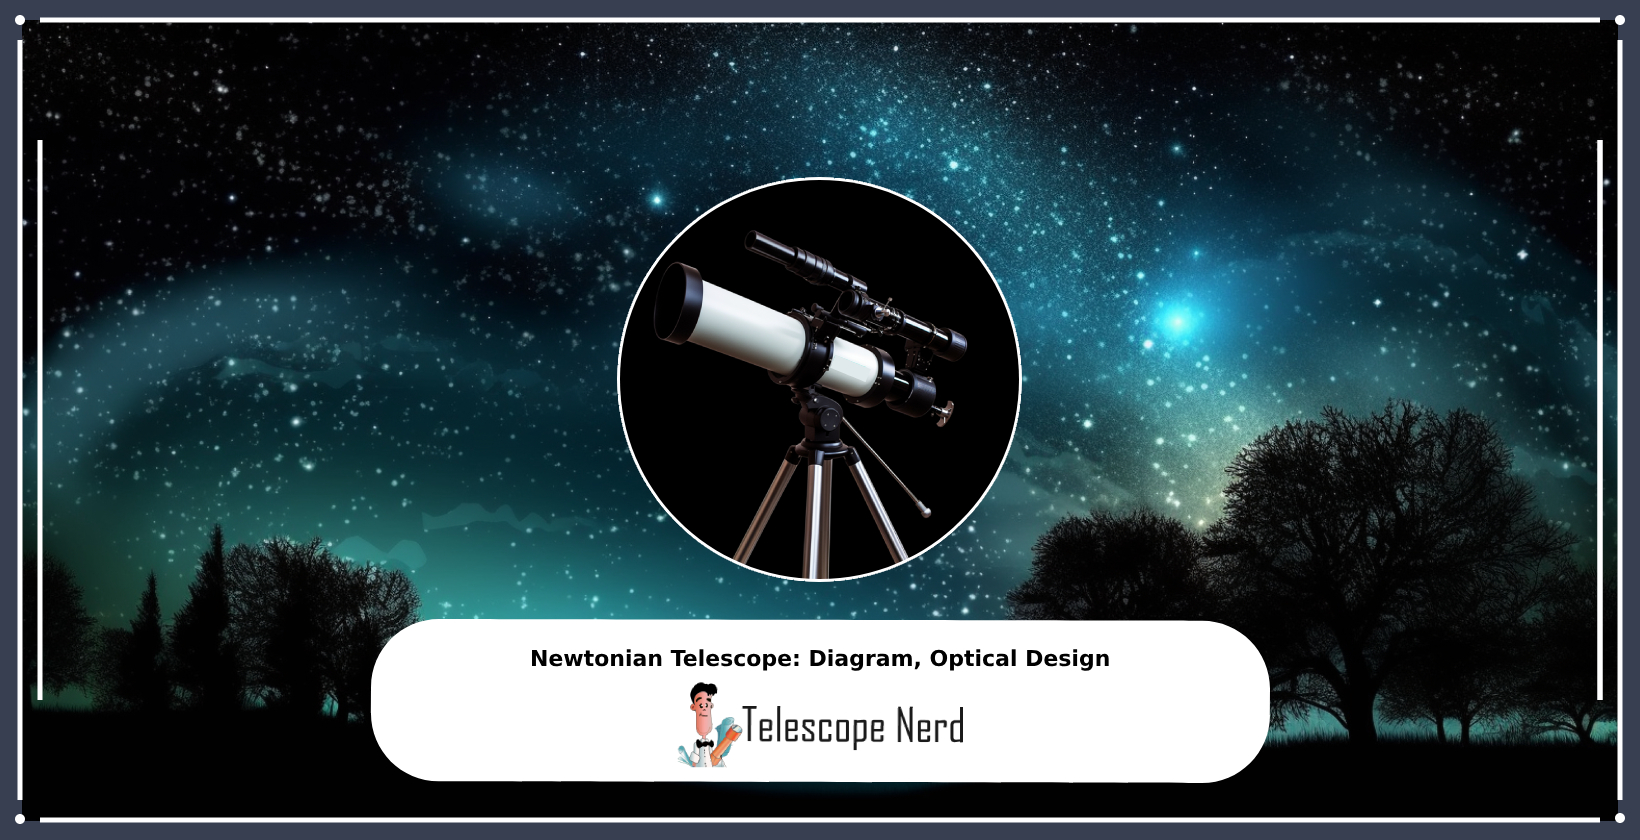 newtonian telescope and newtonian optical design